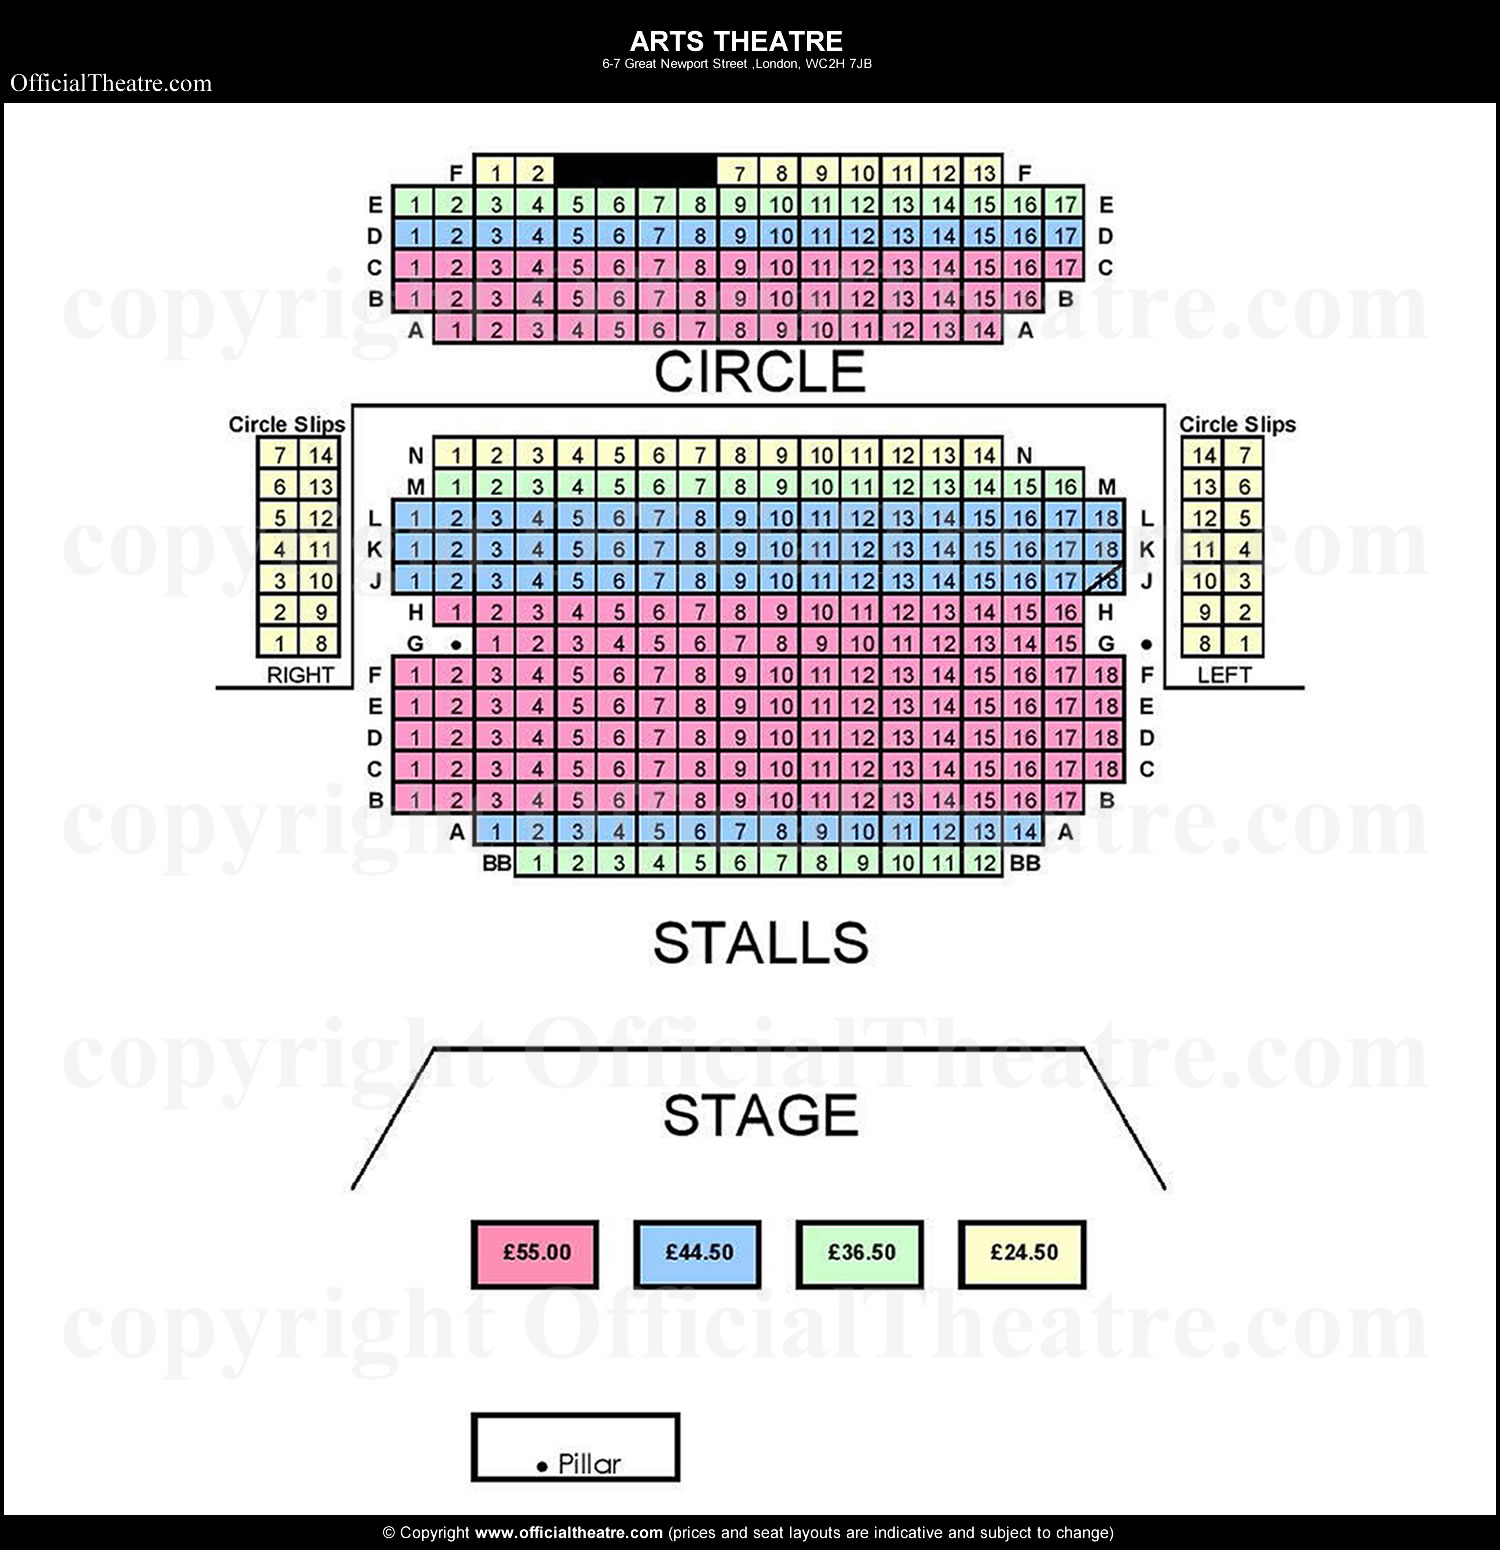 Arts Theatre seating plan